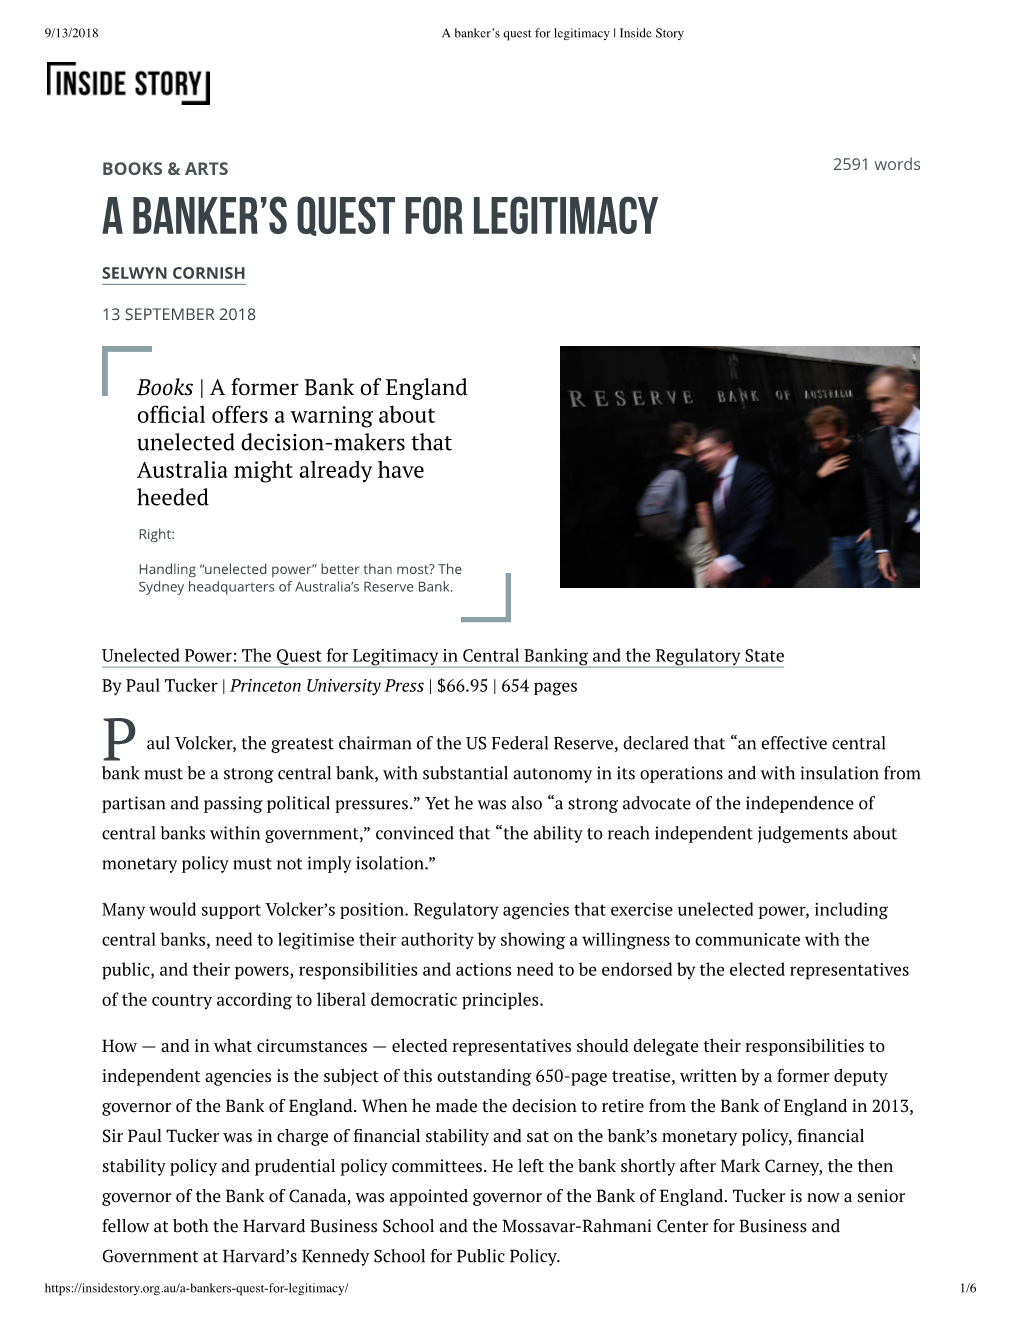 A Banker's Quest for Legitimacy